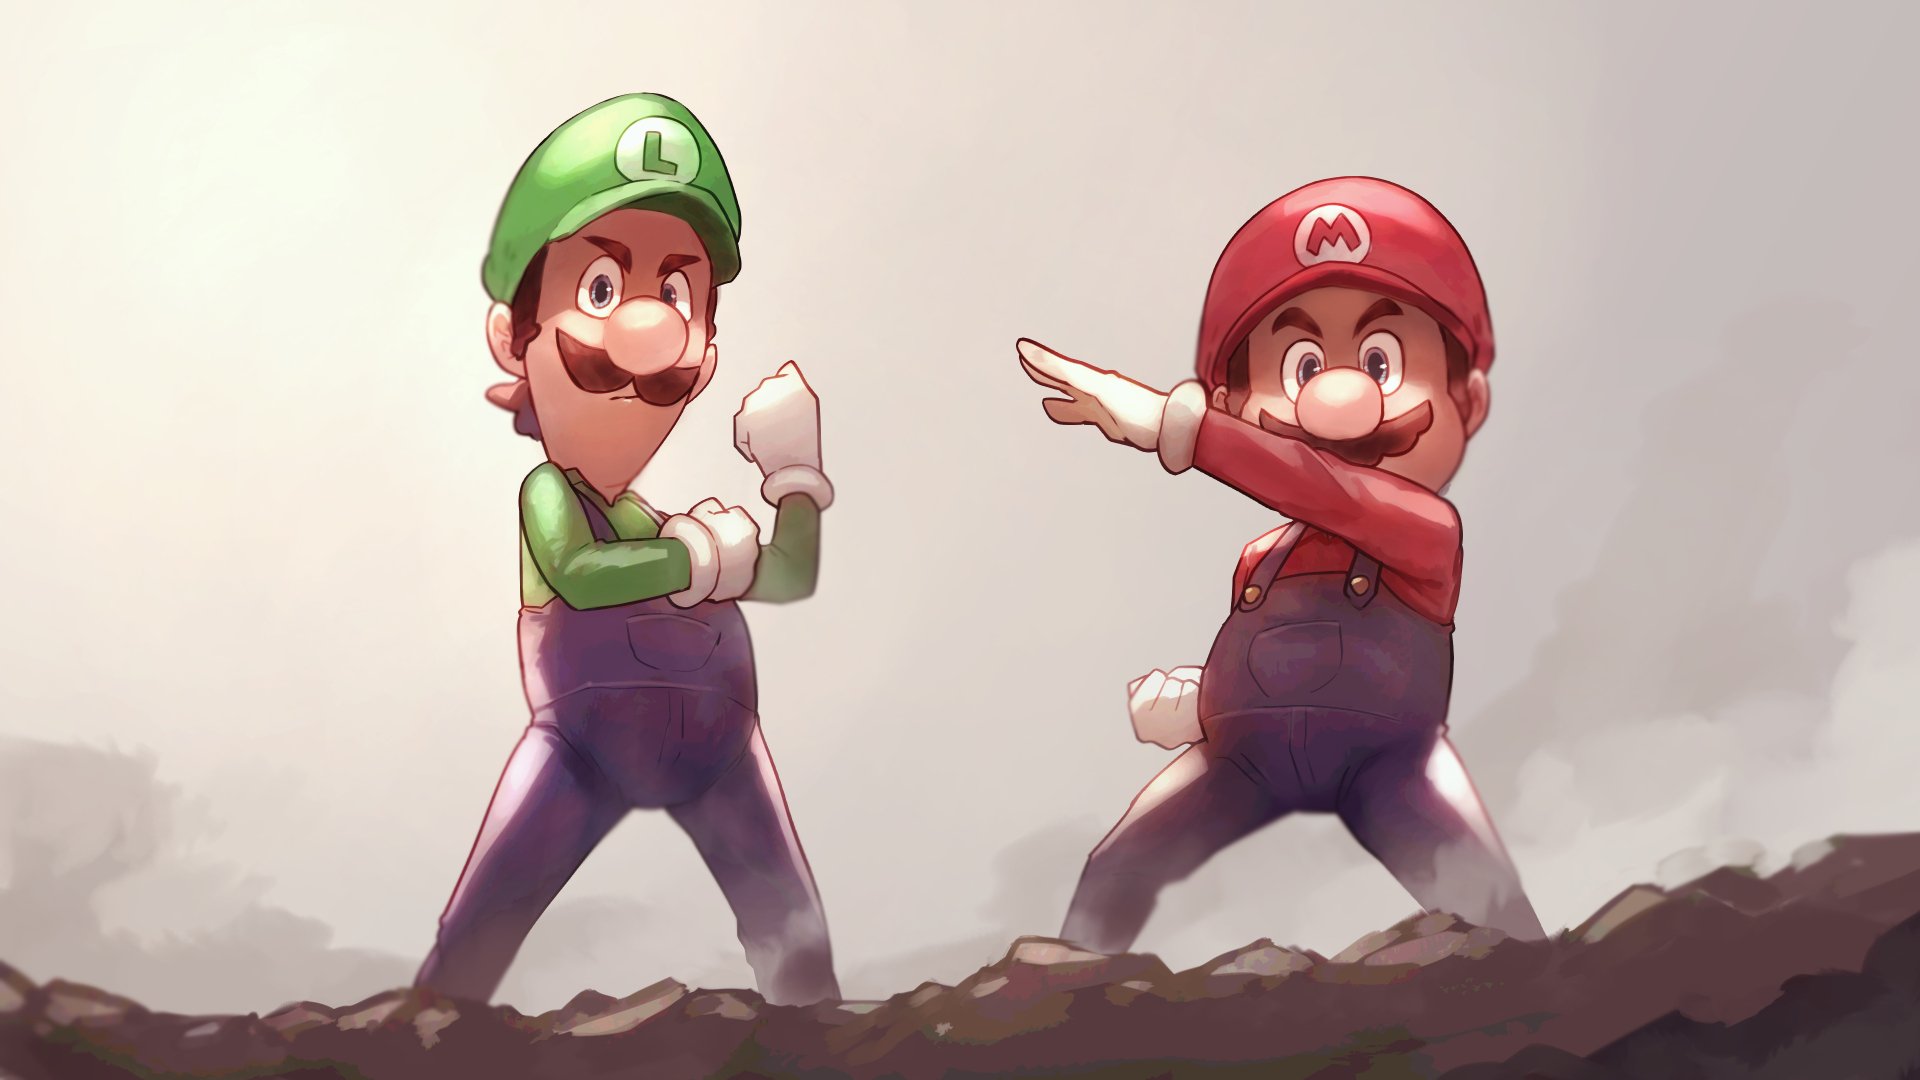 Mario bros HD wallpapers  Pxfuel